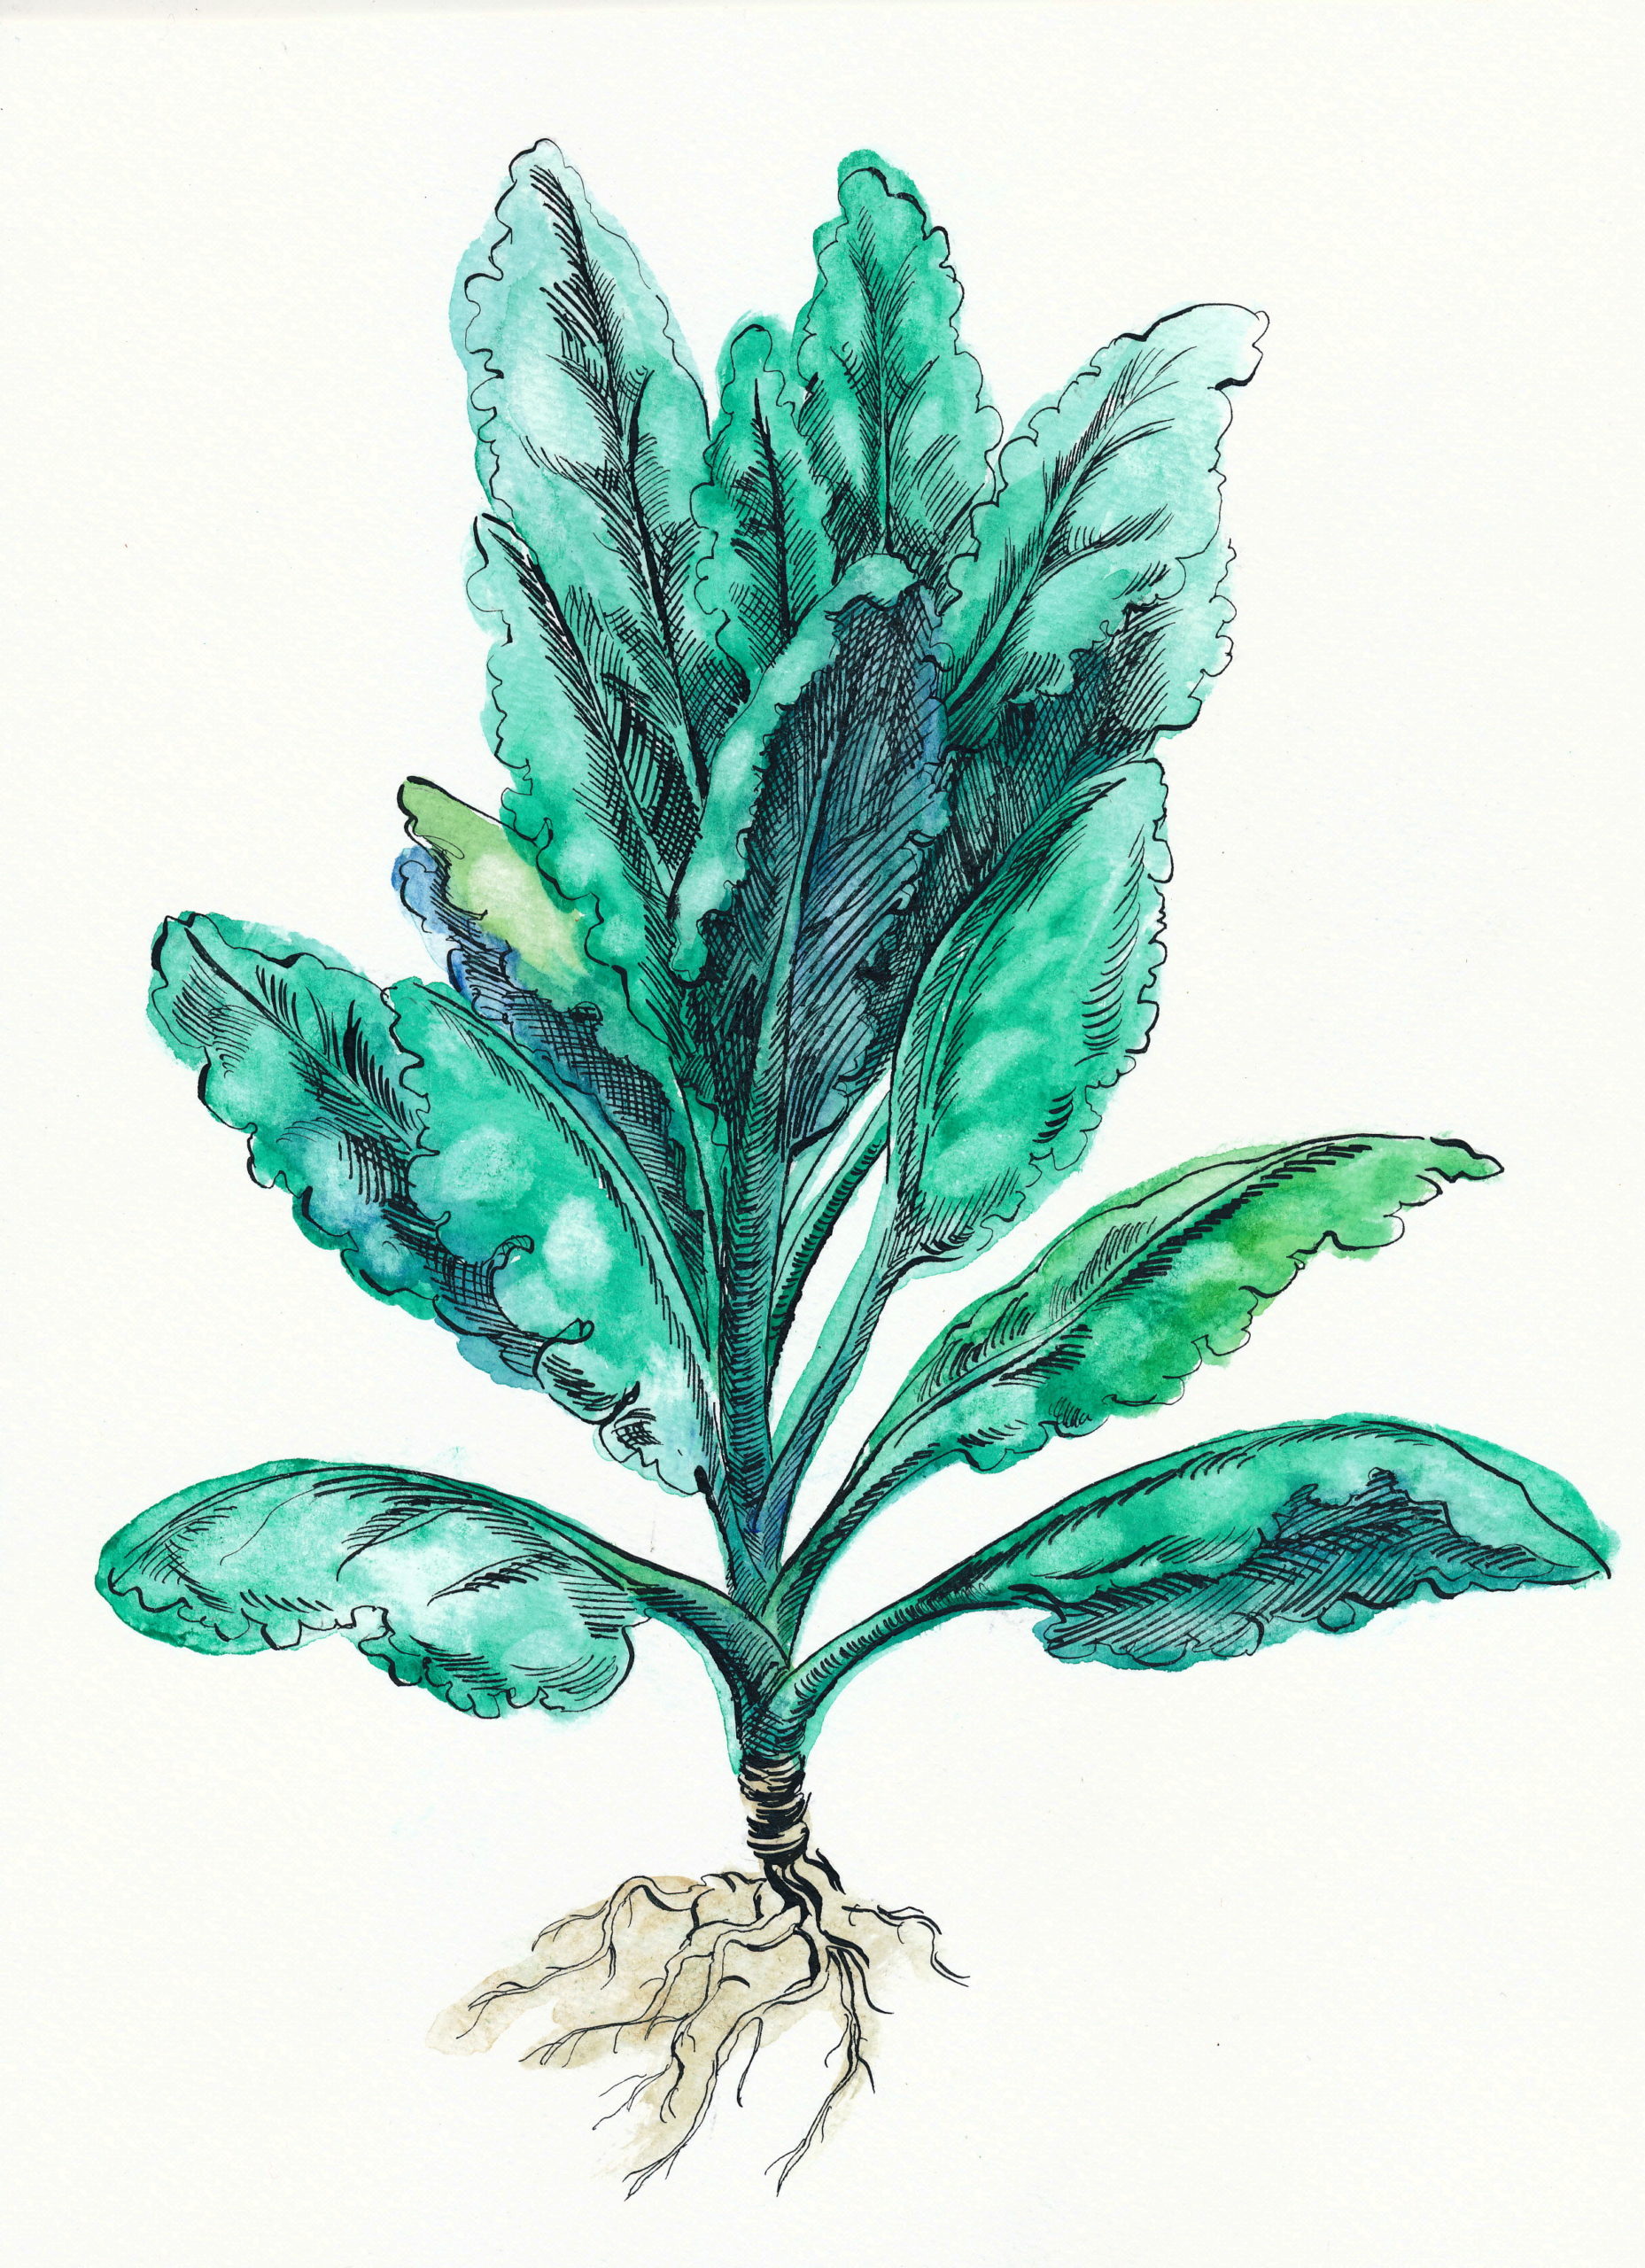 watercolor illustration of kale